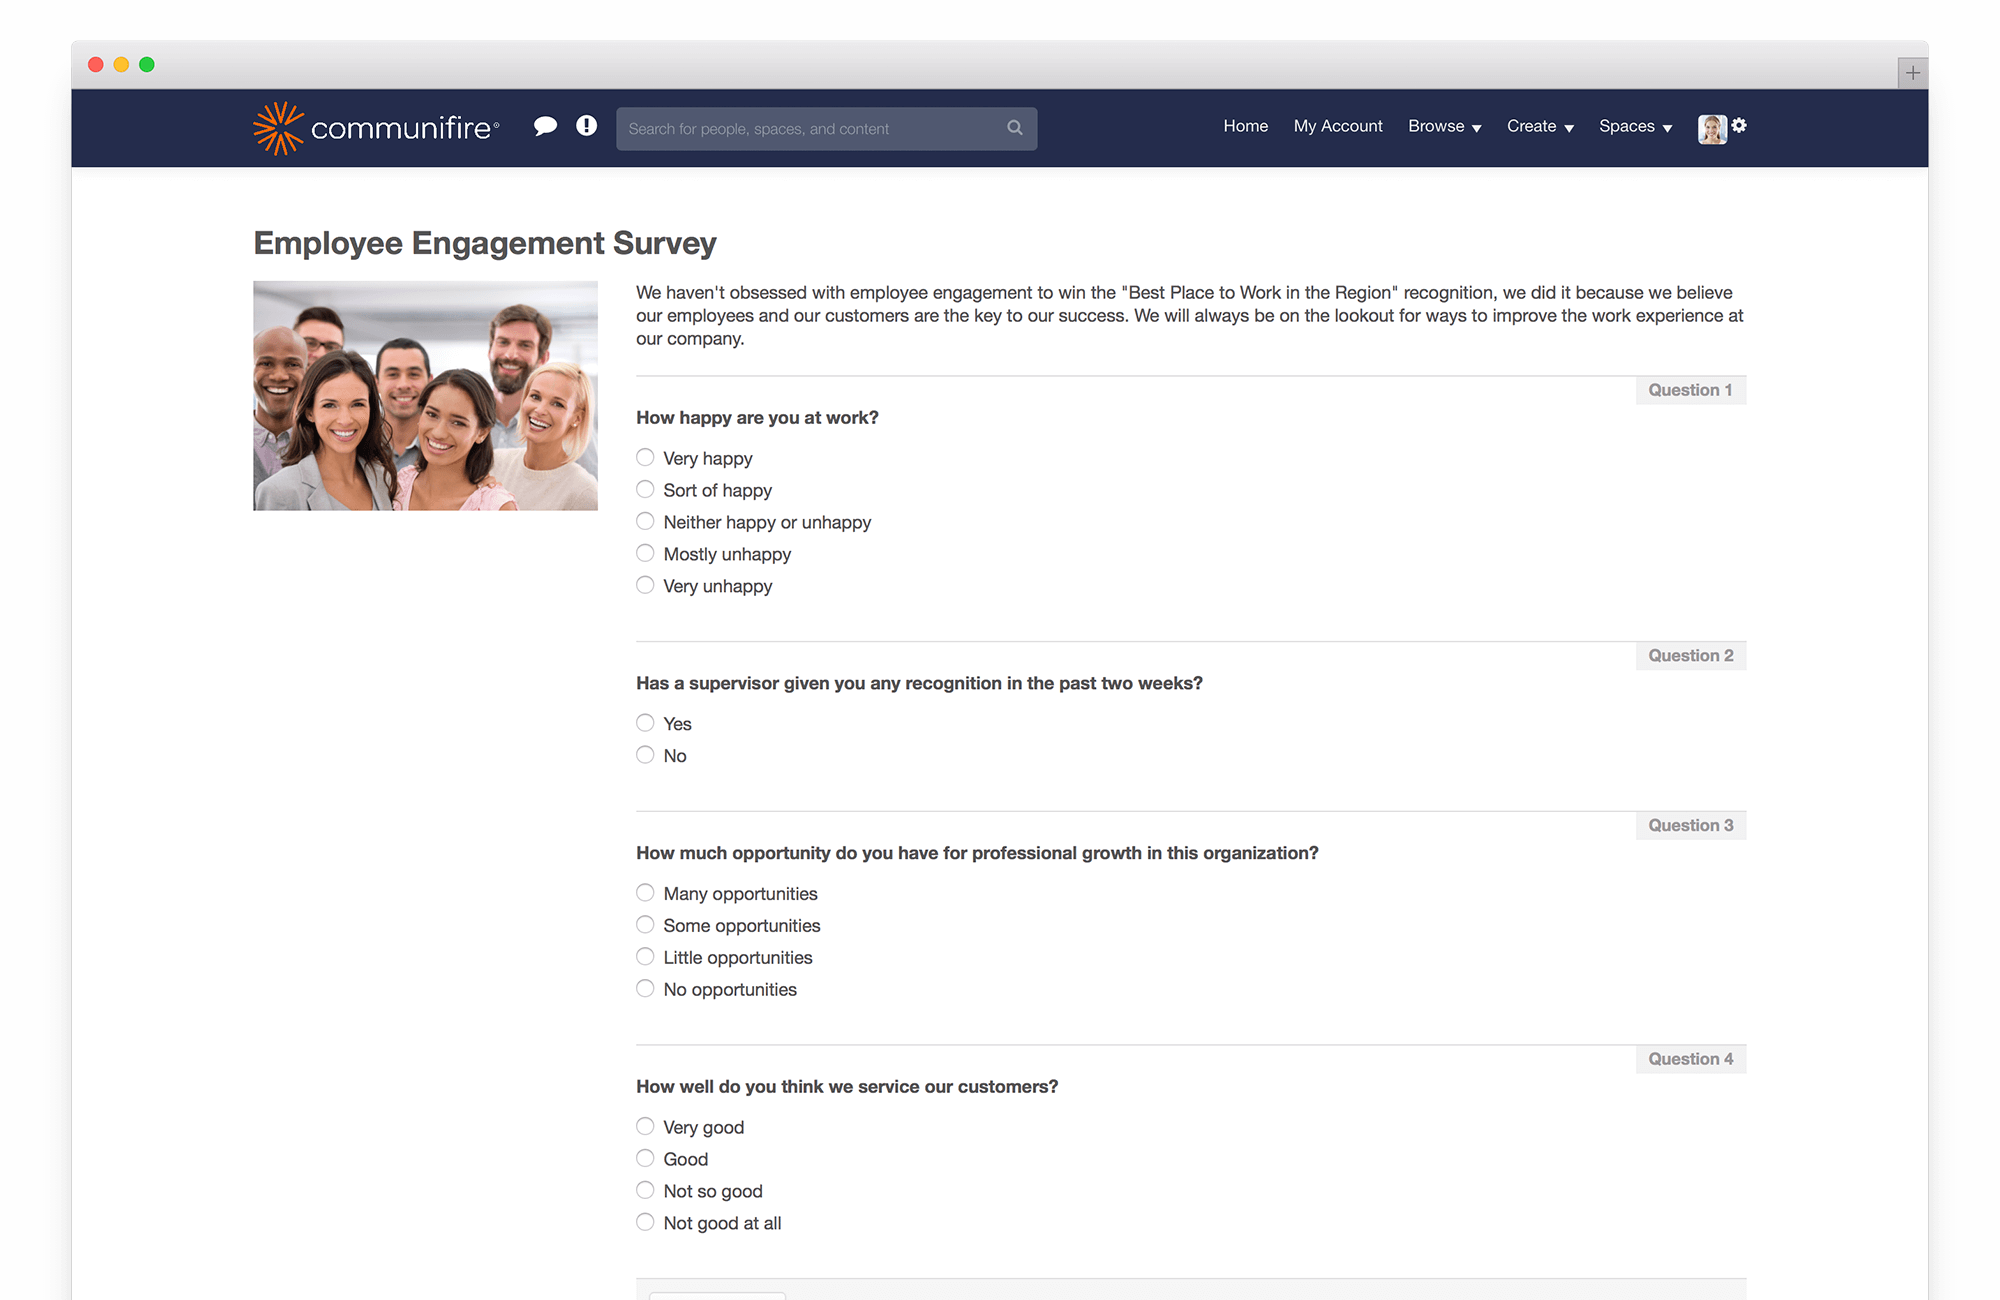 intranet governance - employee engagement survey